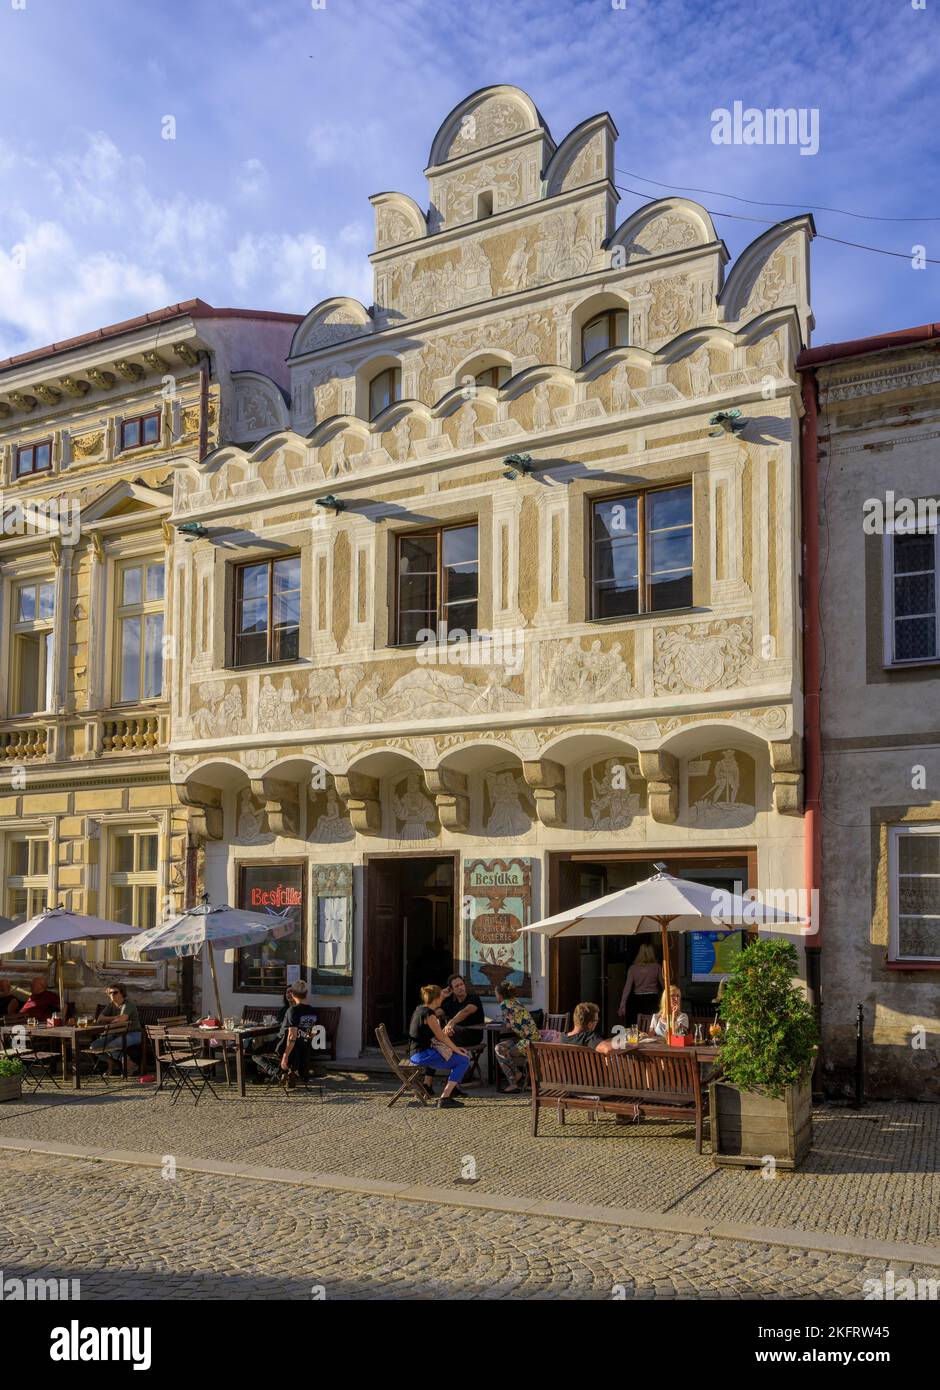 Historic Old Town with Sgraffito House by Besjdka Restaurant, Slavonice, Jiho?eský kraj, Czech Republic, Europe Stock Photo